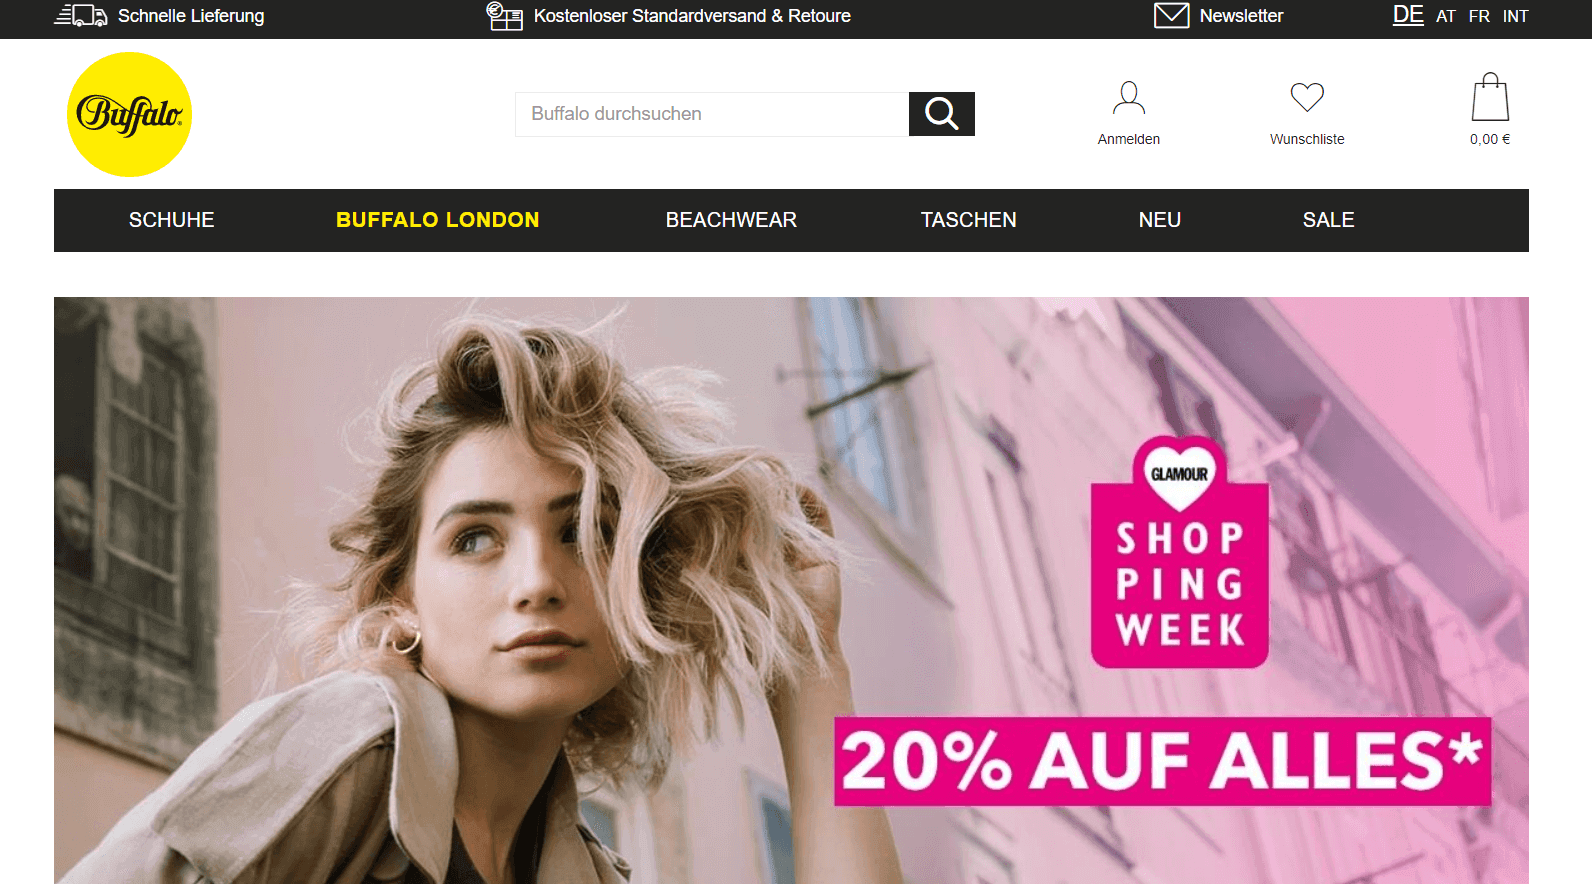 Buffalo купити онлайн з доставкою в Україну - Meest Shopping - 2